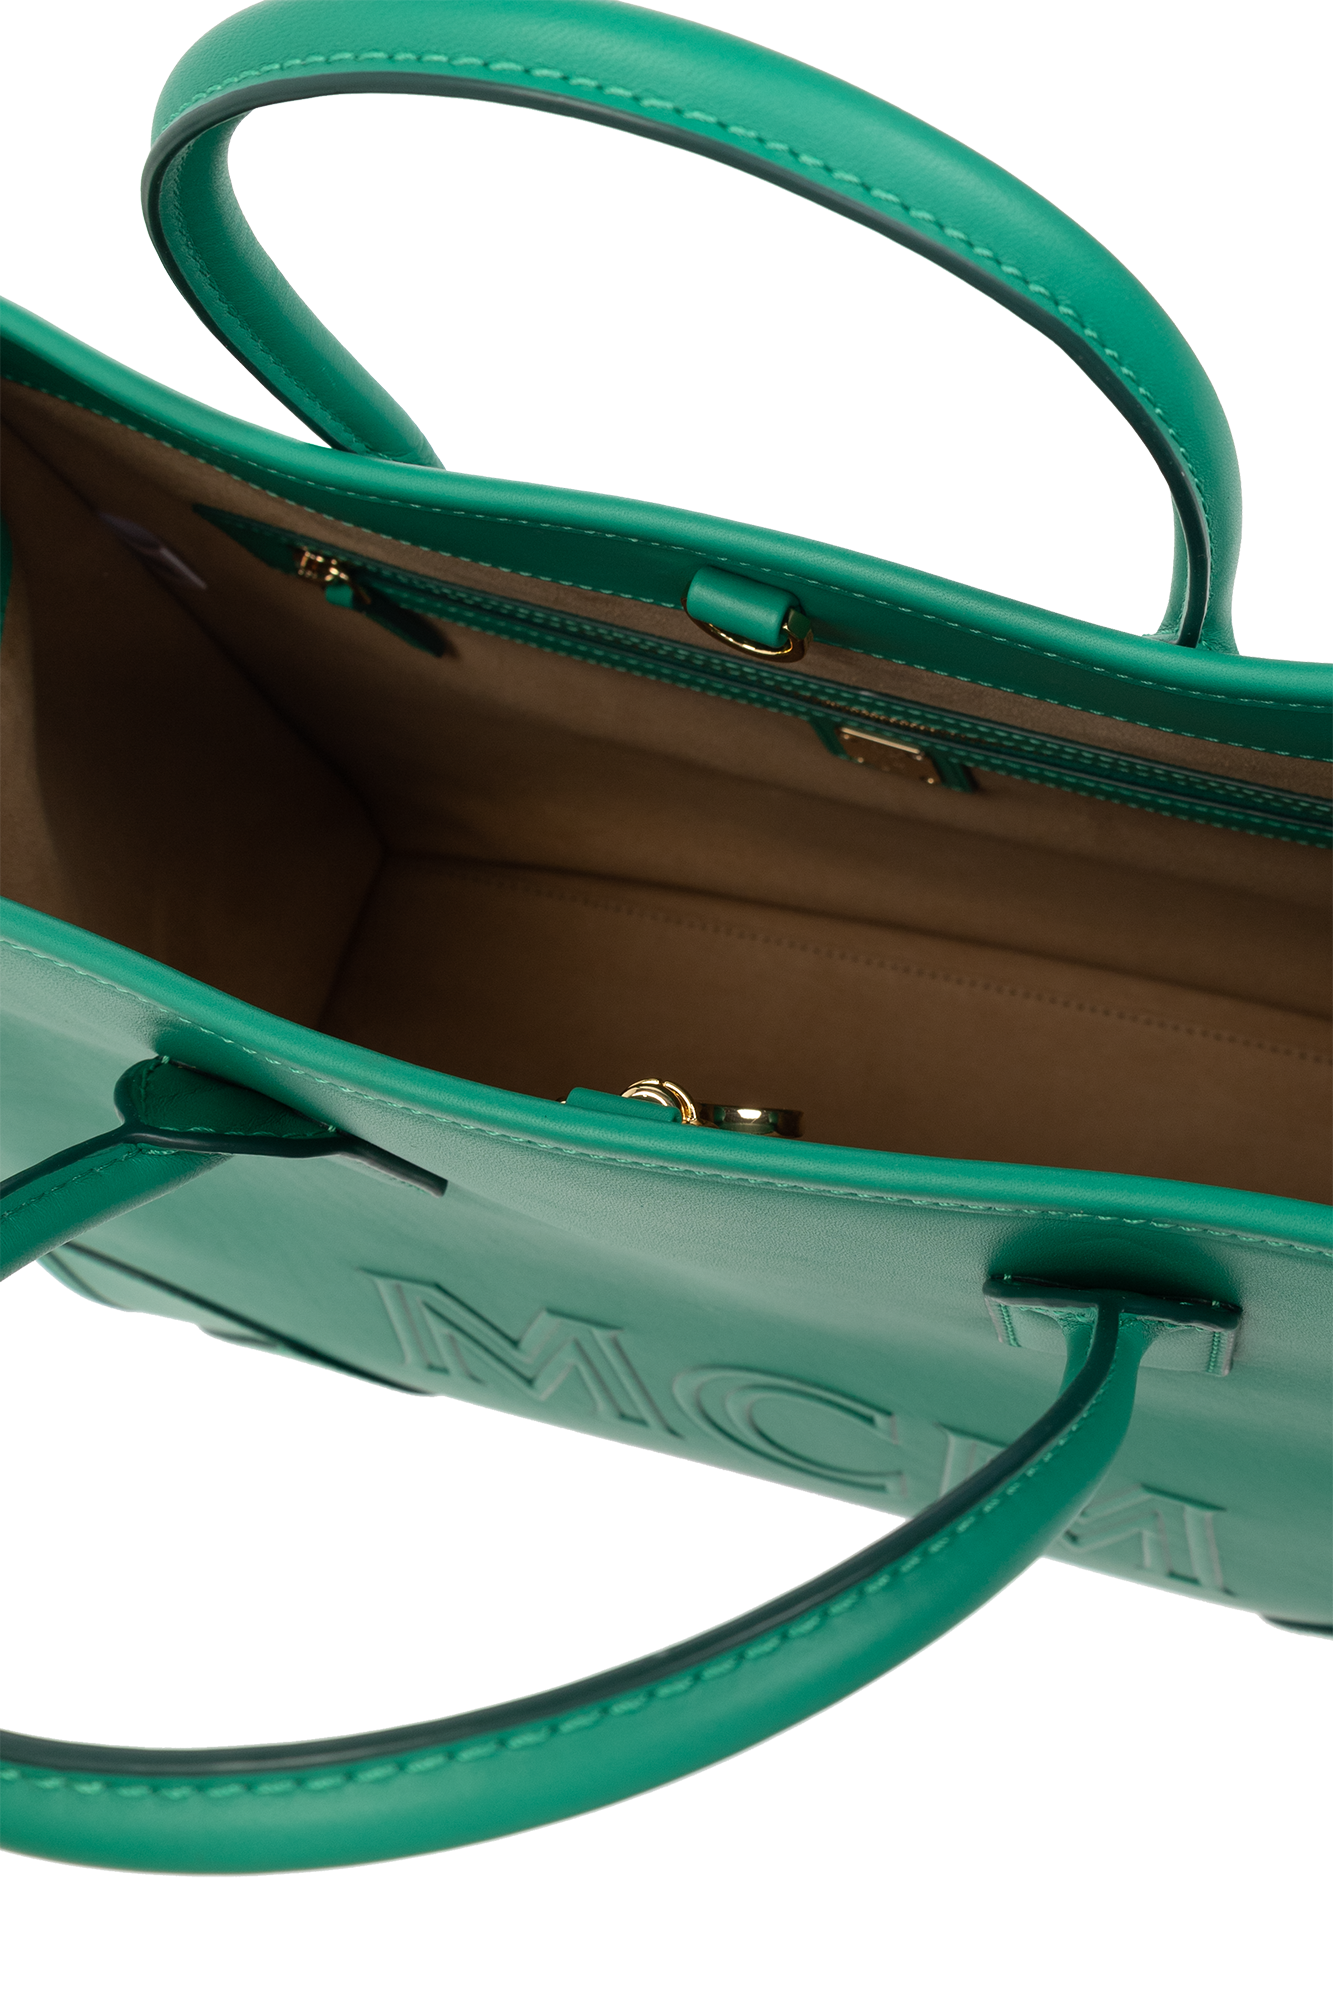 MCM Munchen - Tote bag for Woman - Green - MWTCSSX01-J8